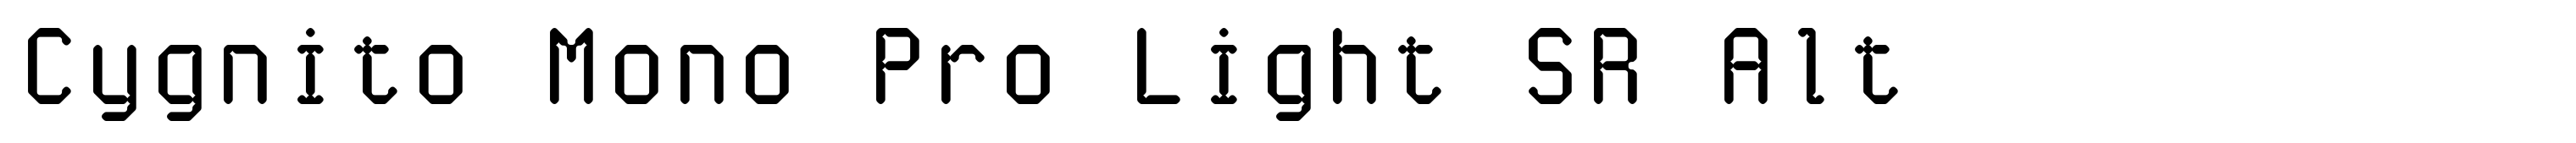 Cygnito Mono Pro Light SR Alt